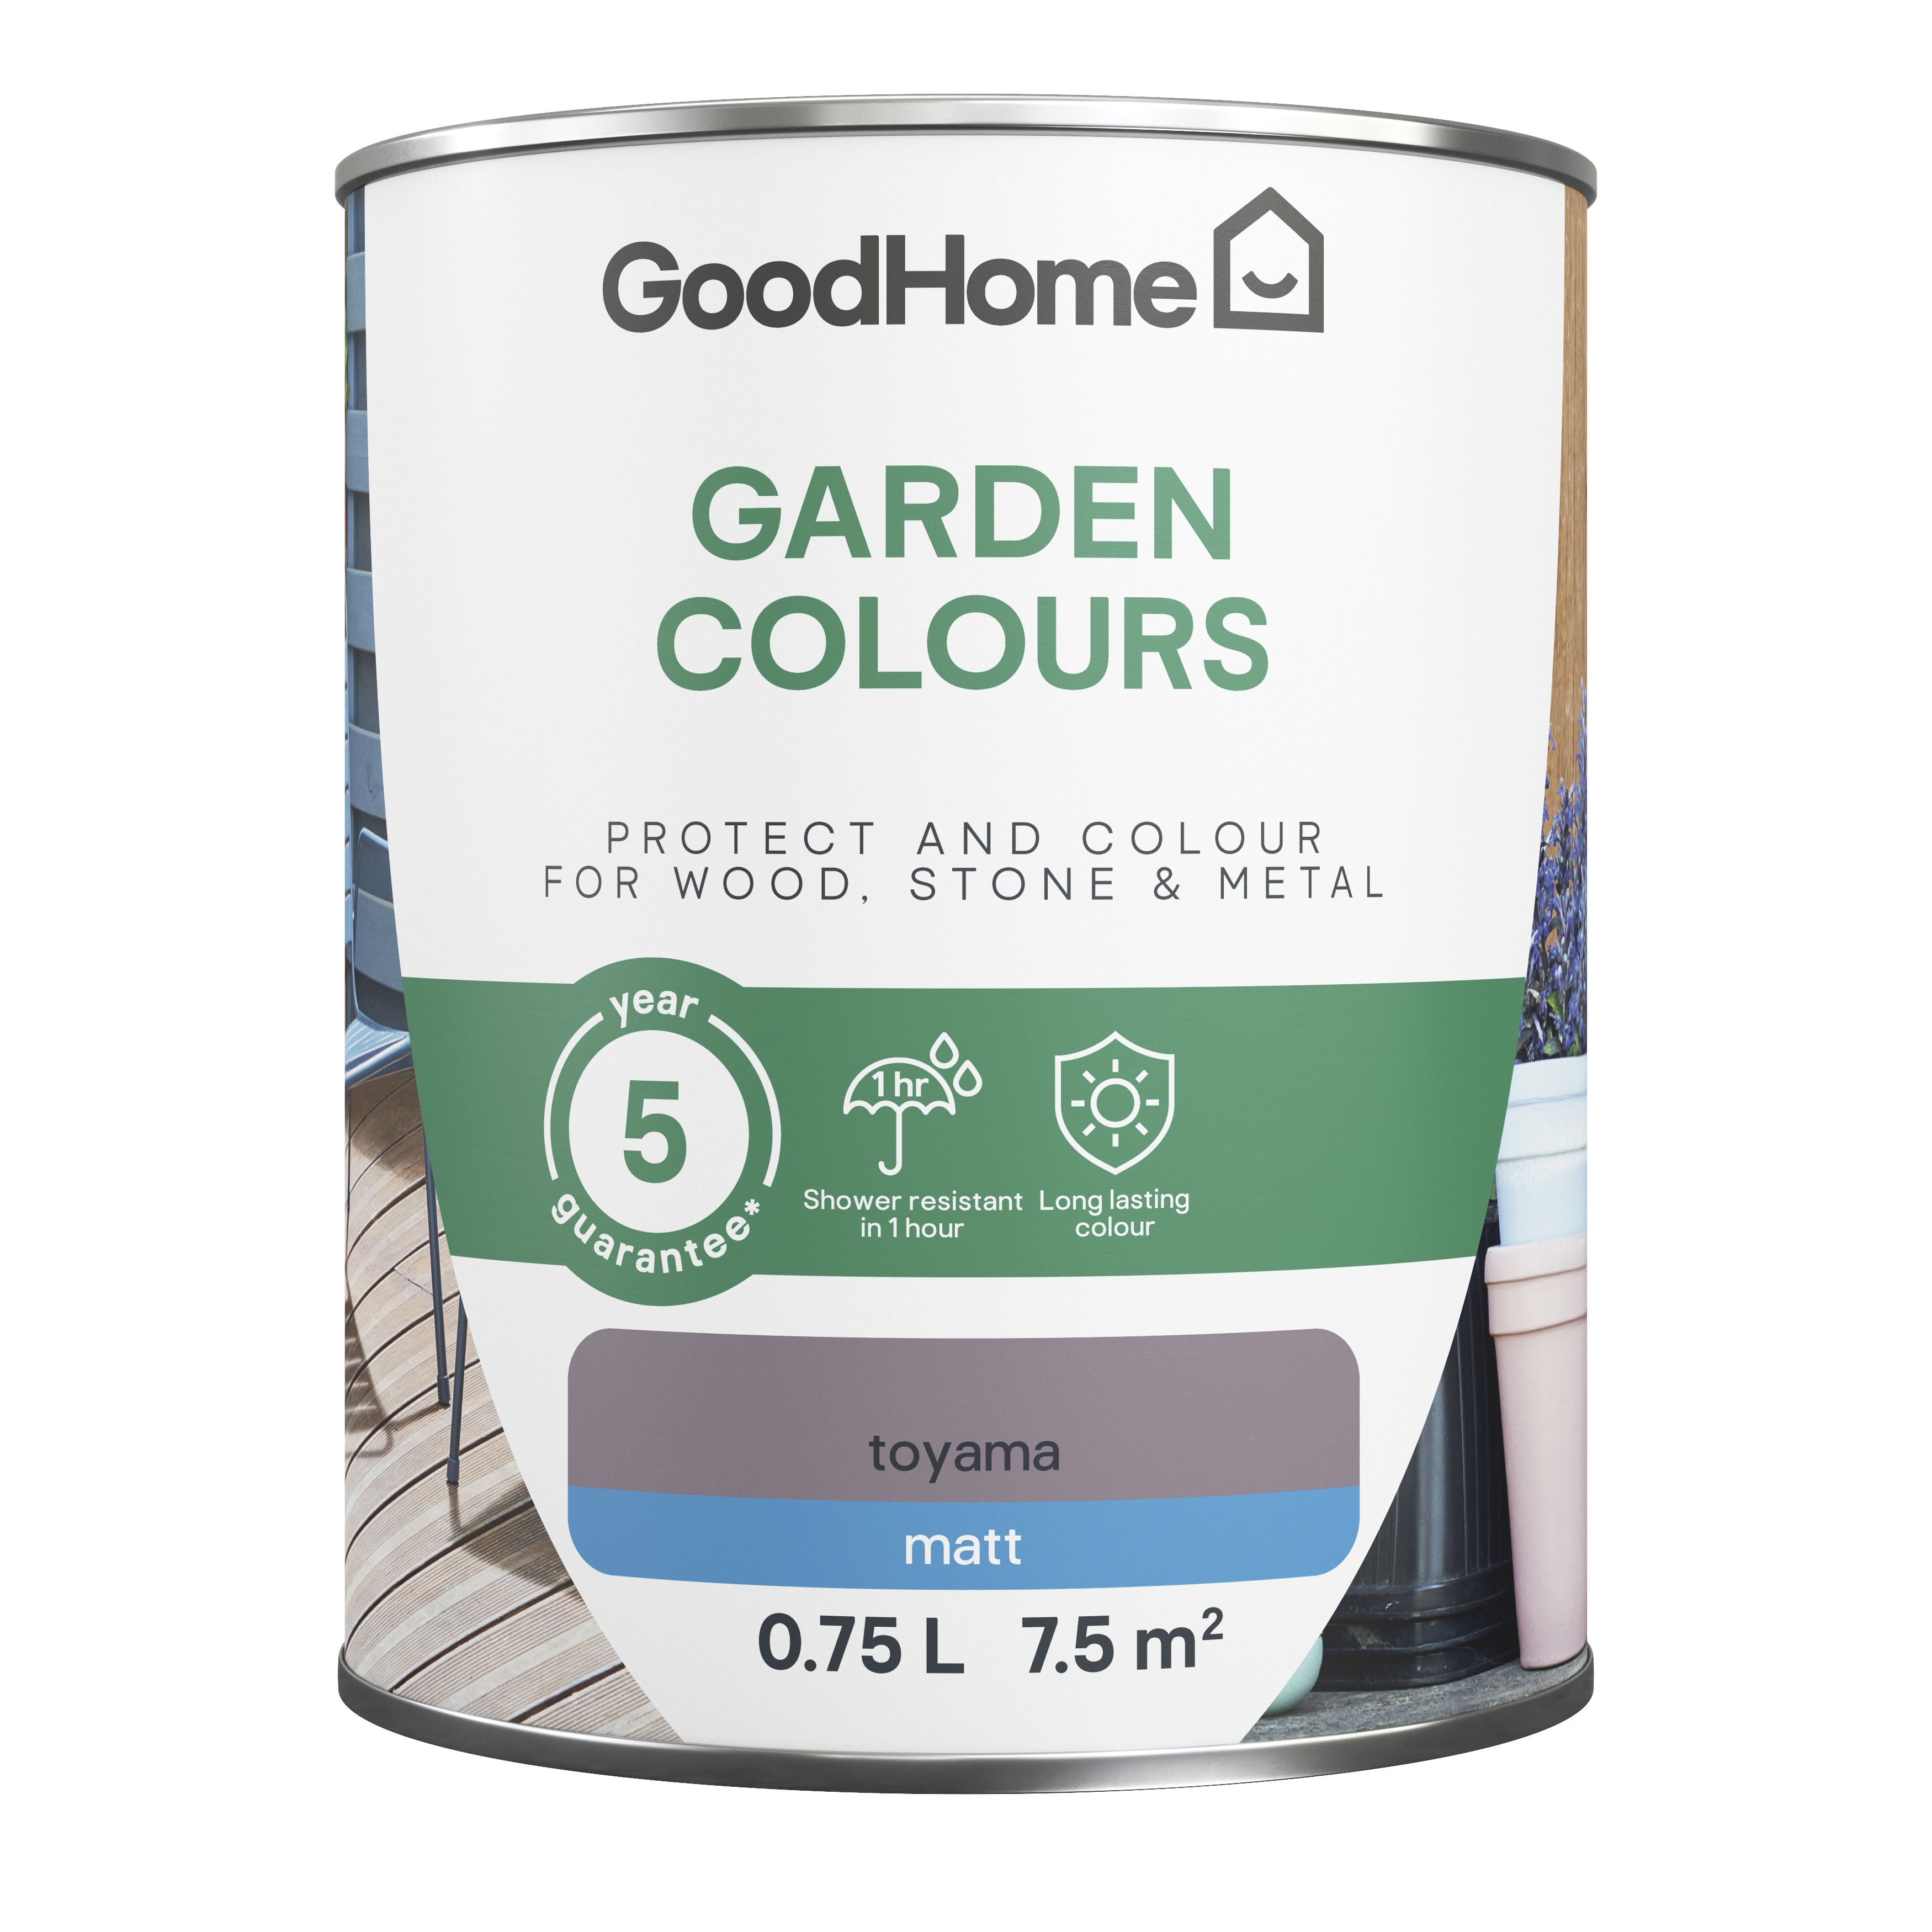 GoodHome Colour It Toyama Matt Multi-surface paint, 750ml